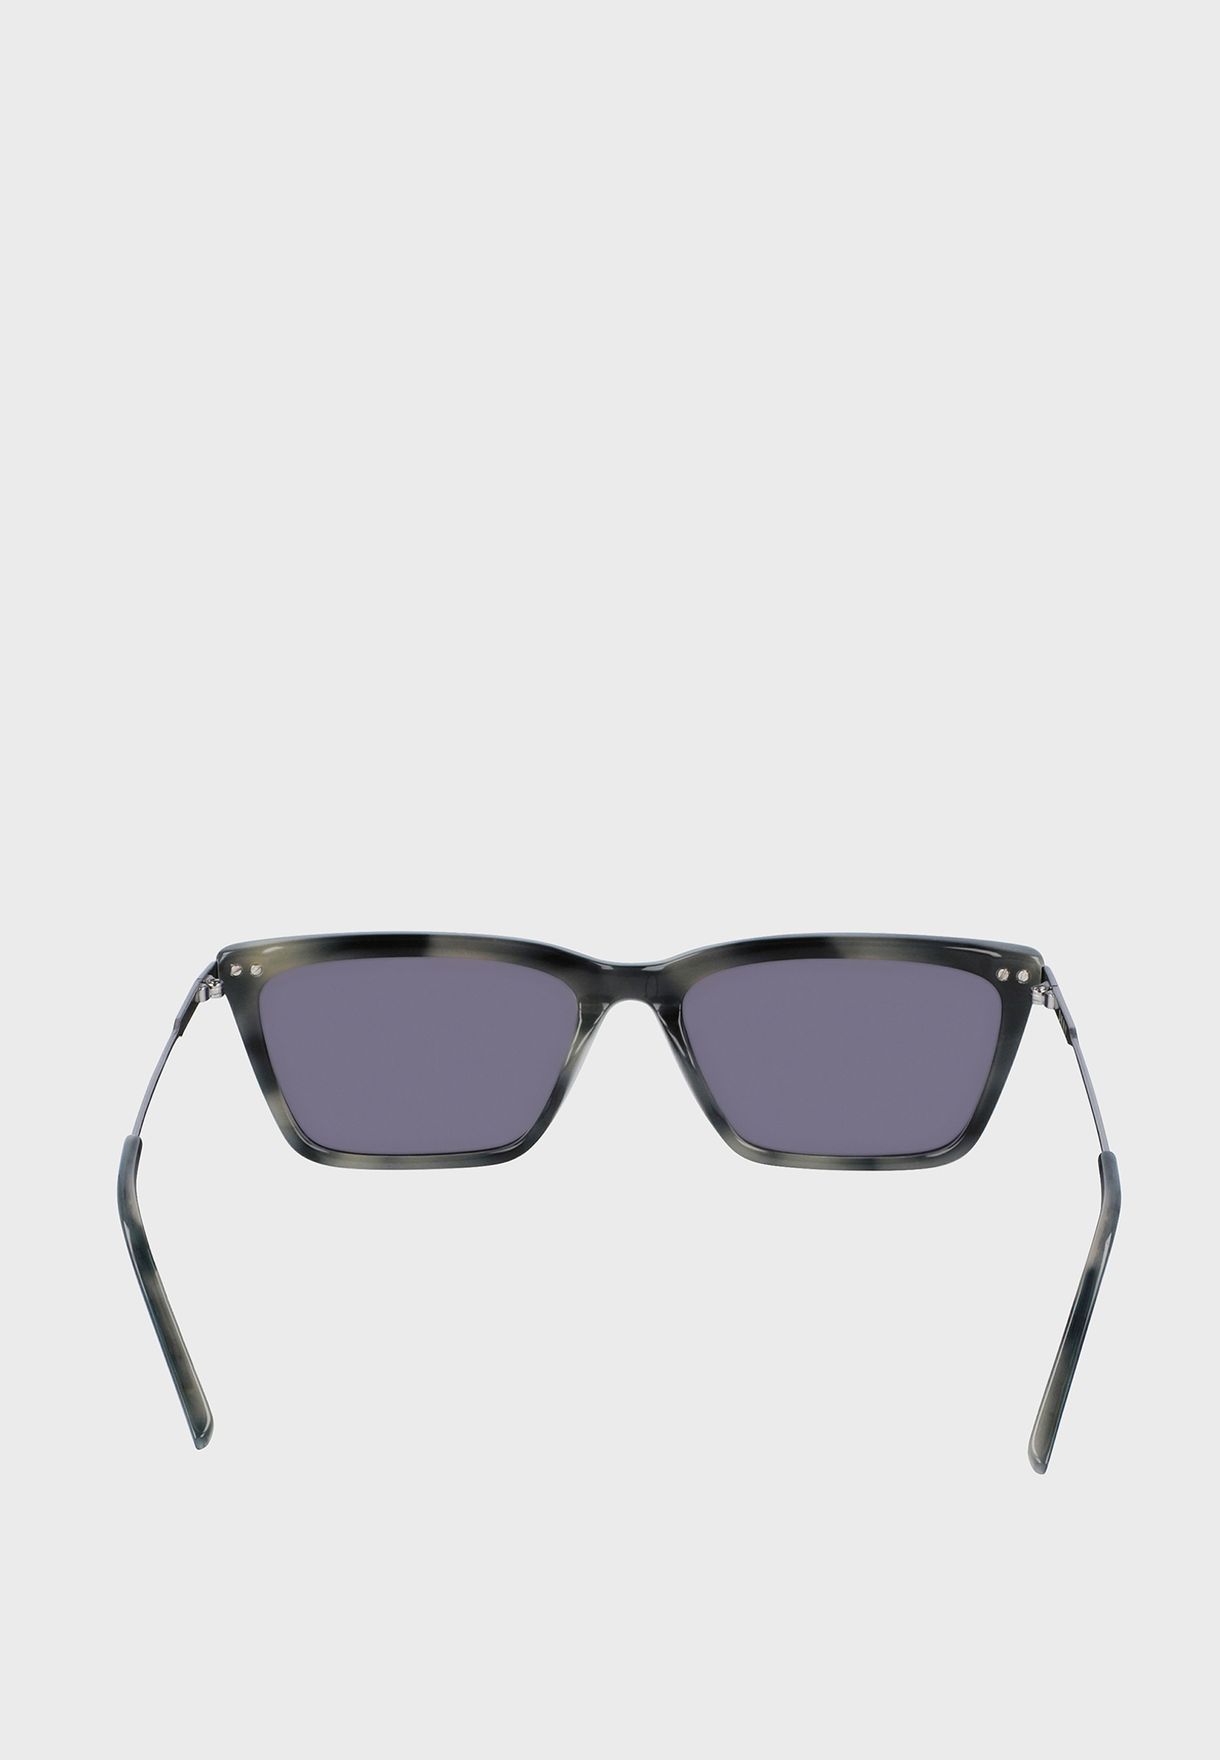 DK709S Oval Shape Sunglasses